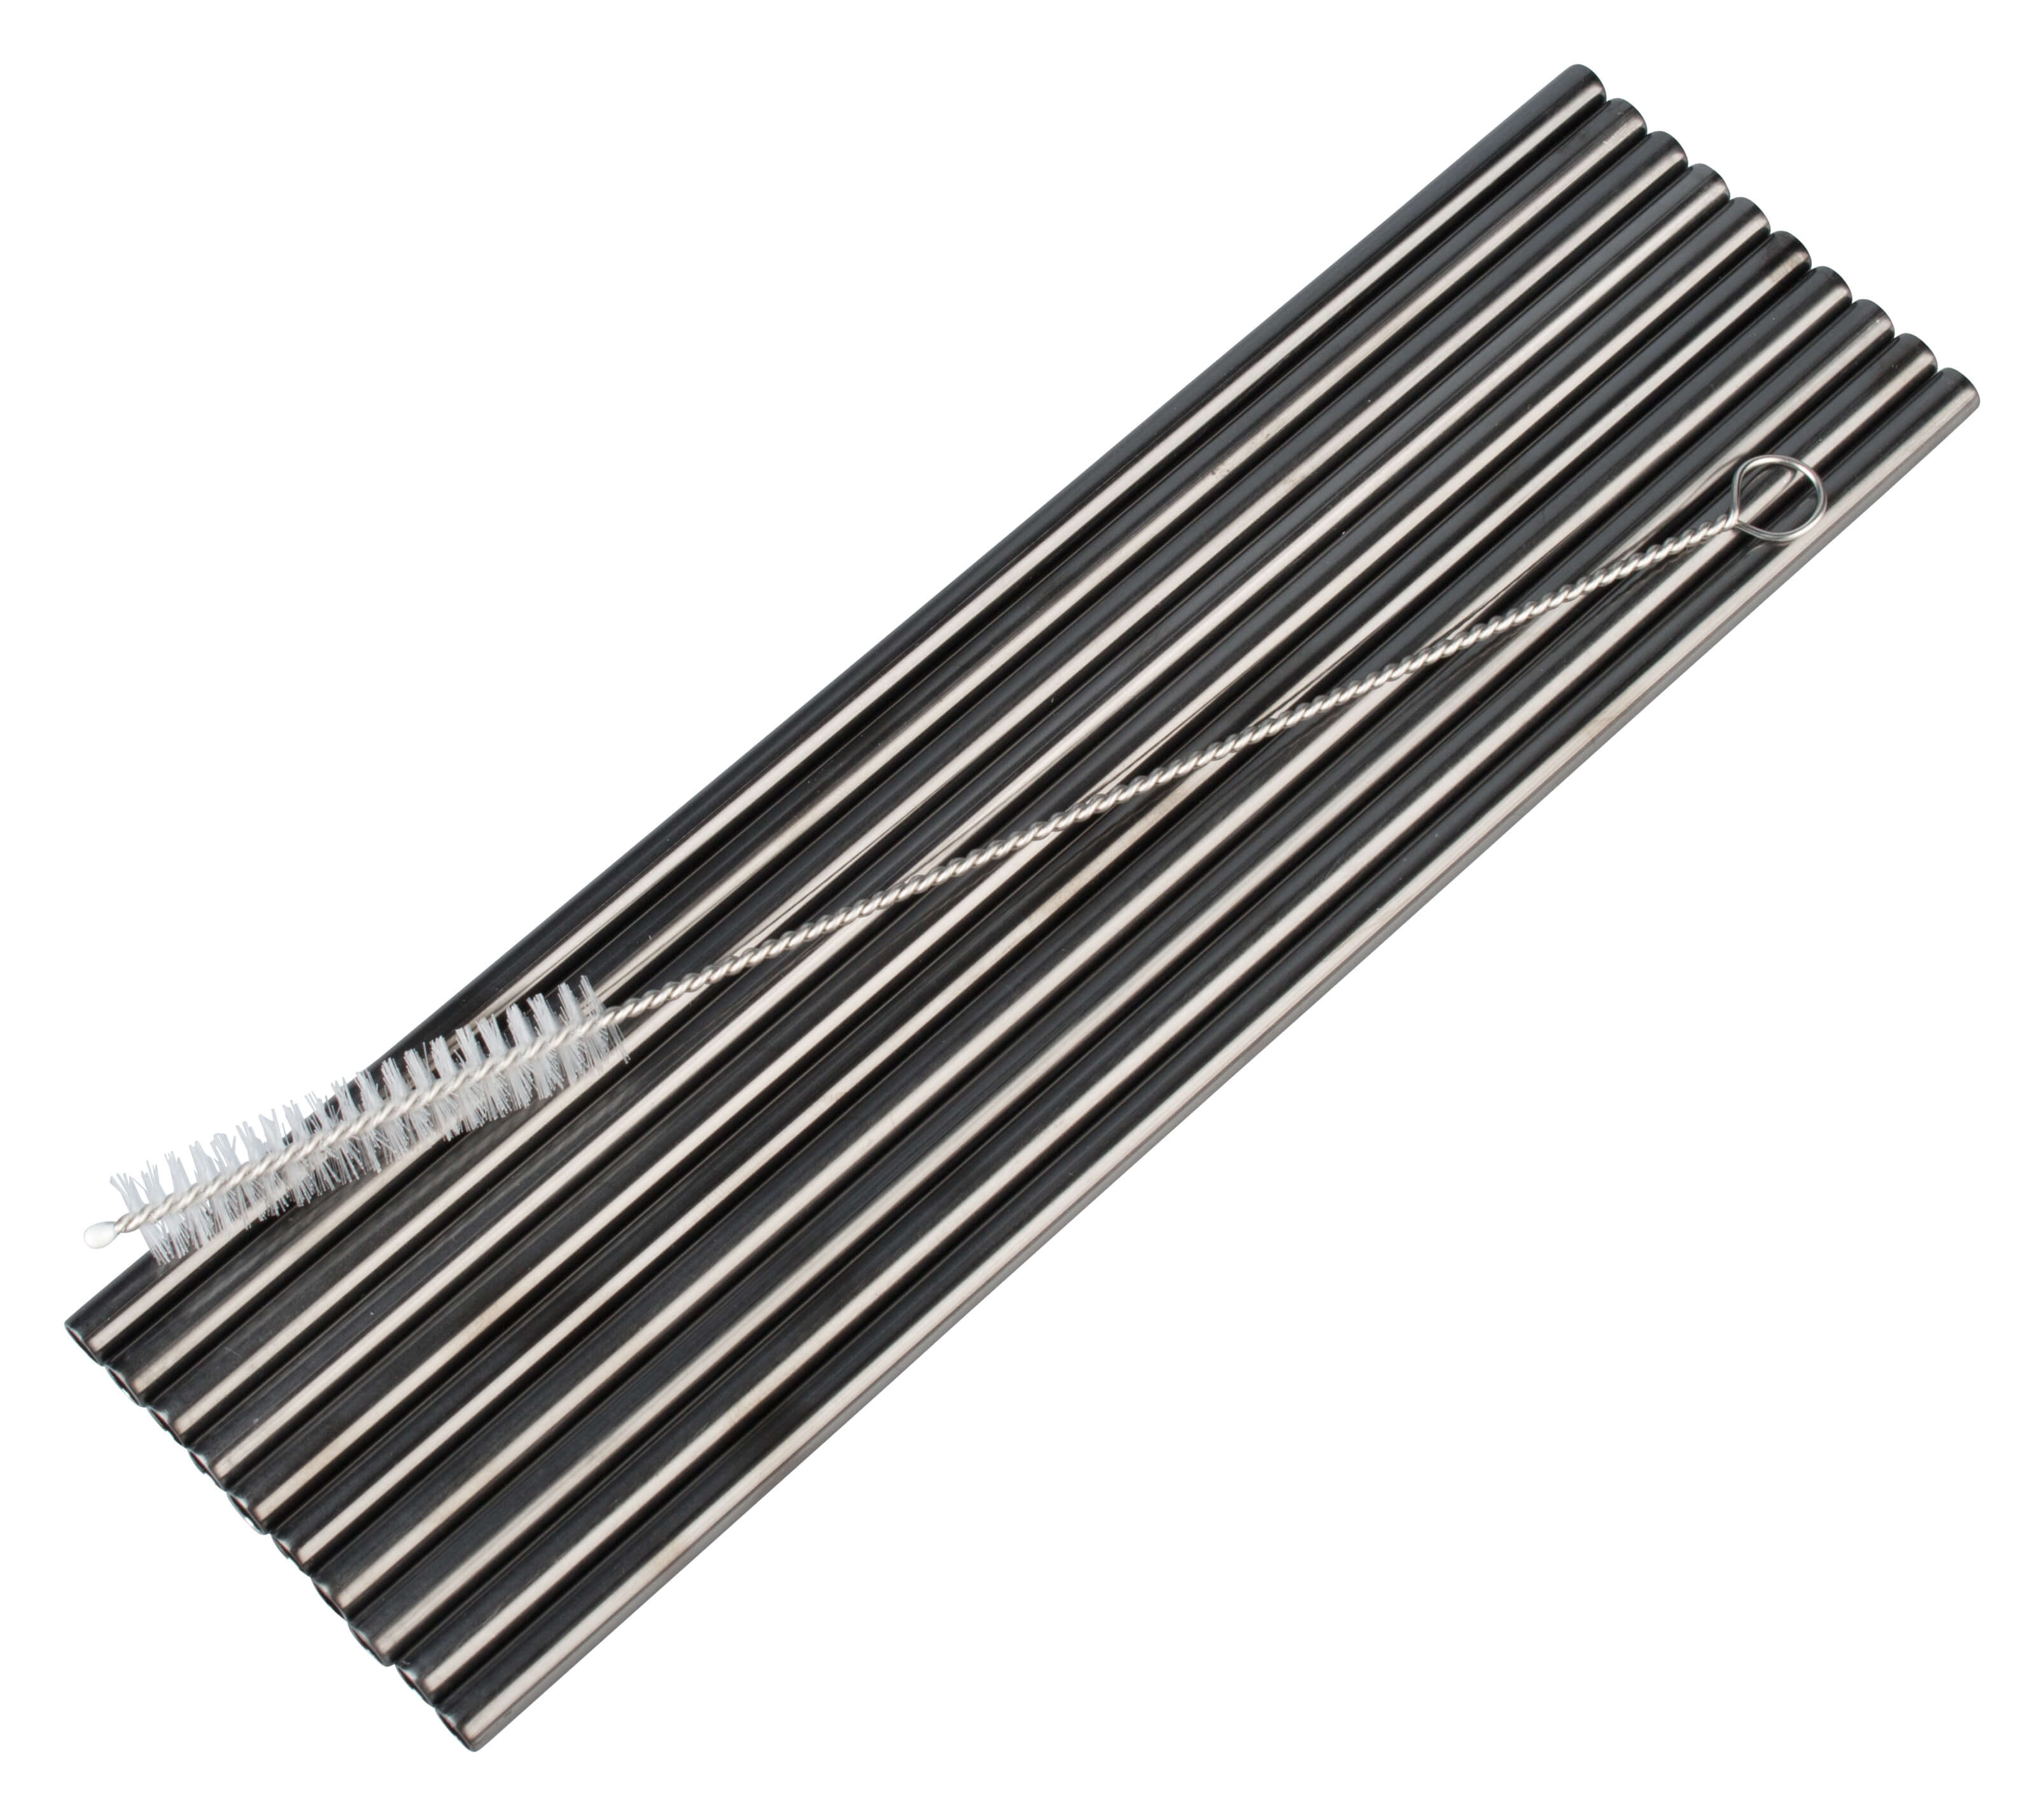 Drinking straws, stainless steel (6x215mm), gunmetal black - 10 pcs. plus cleaning brush